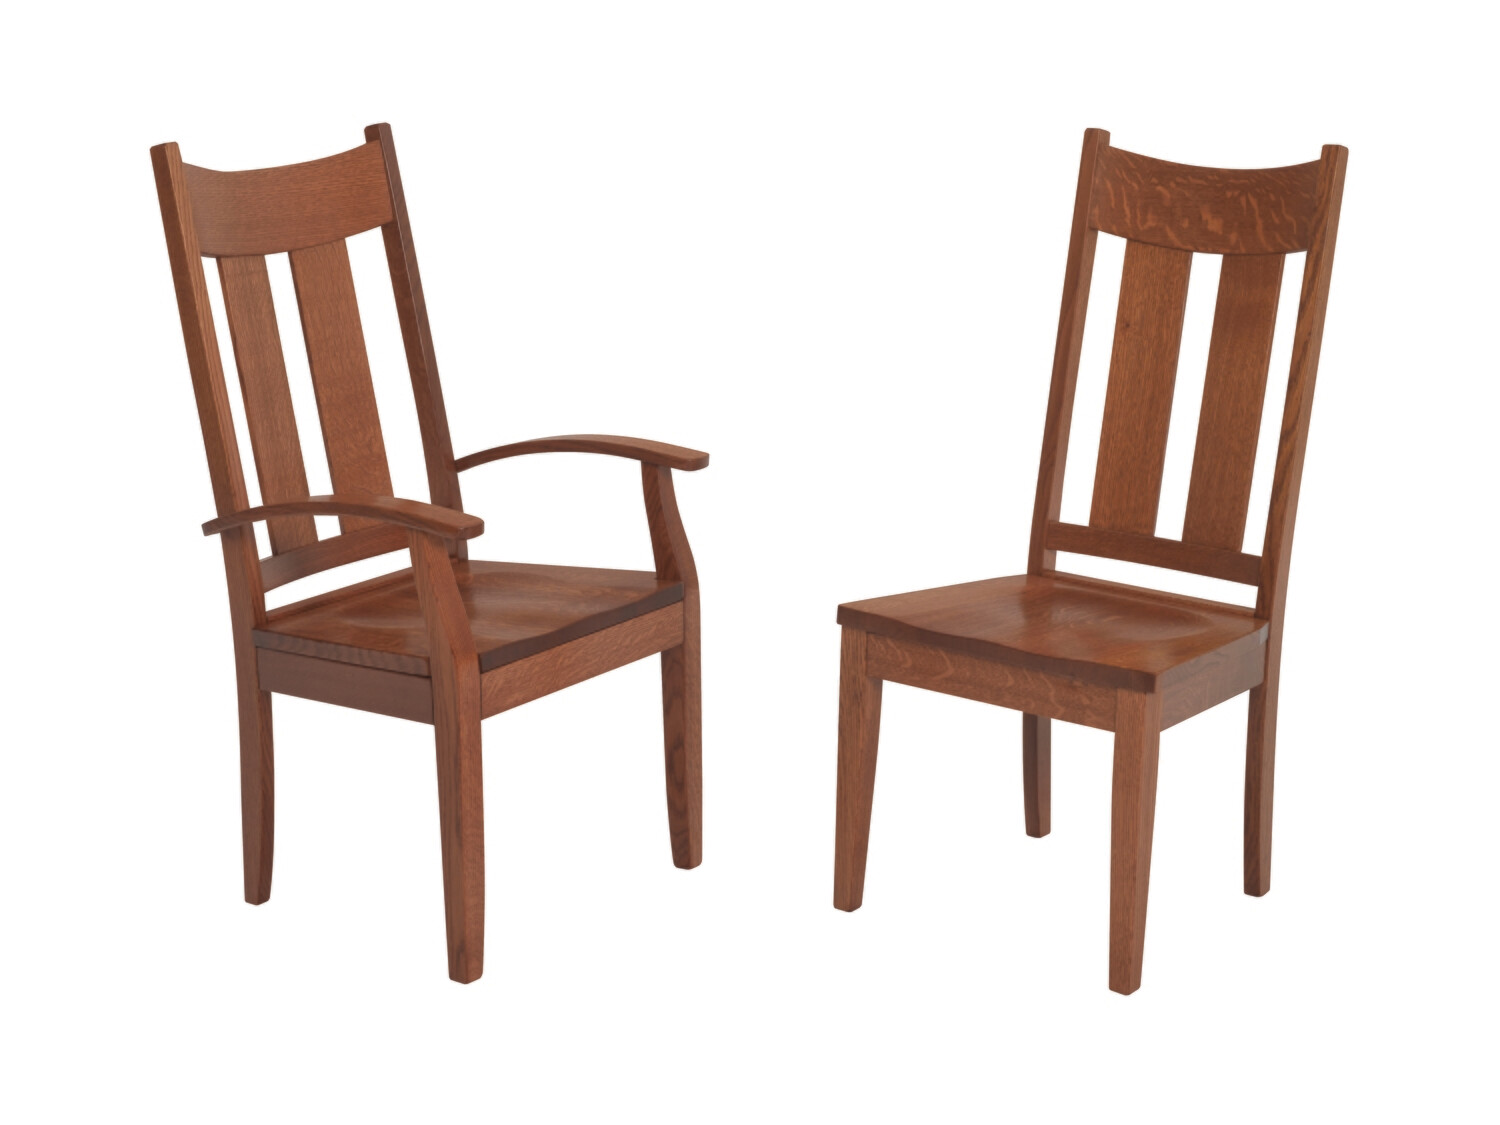 Aspen Chairs